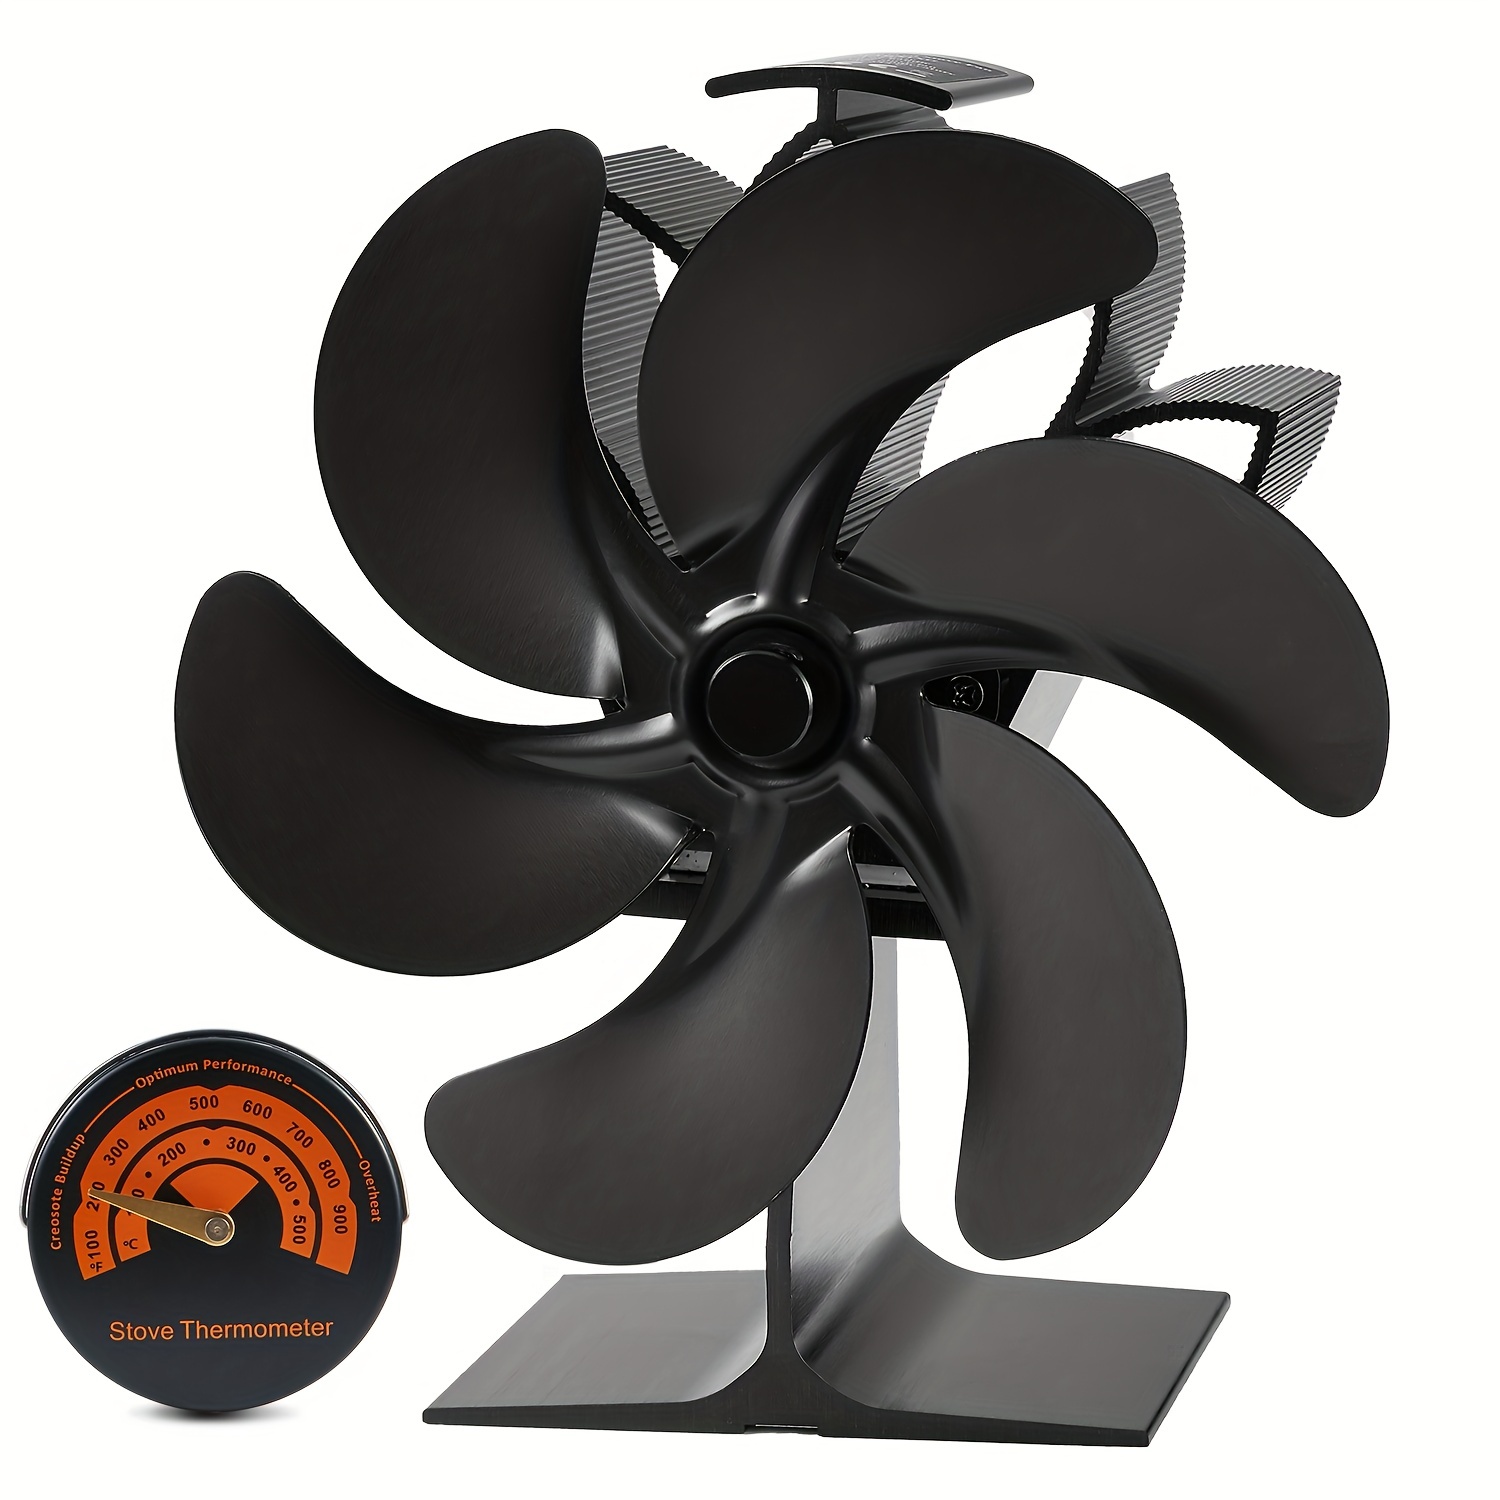 Wood Stove Fan Heat Powered 6 Blade Fireplace Fan Non - Temu